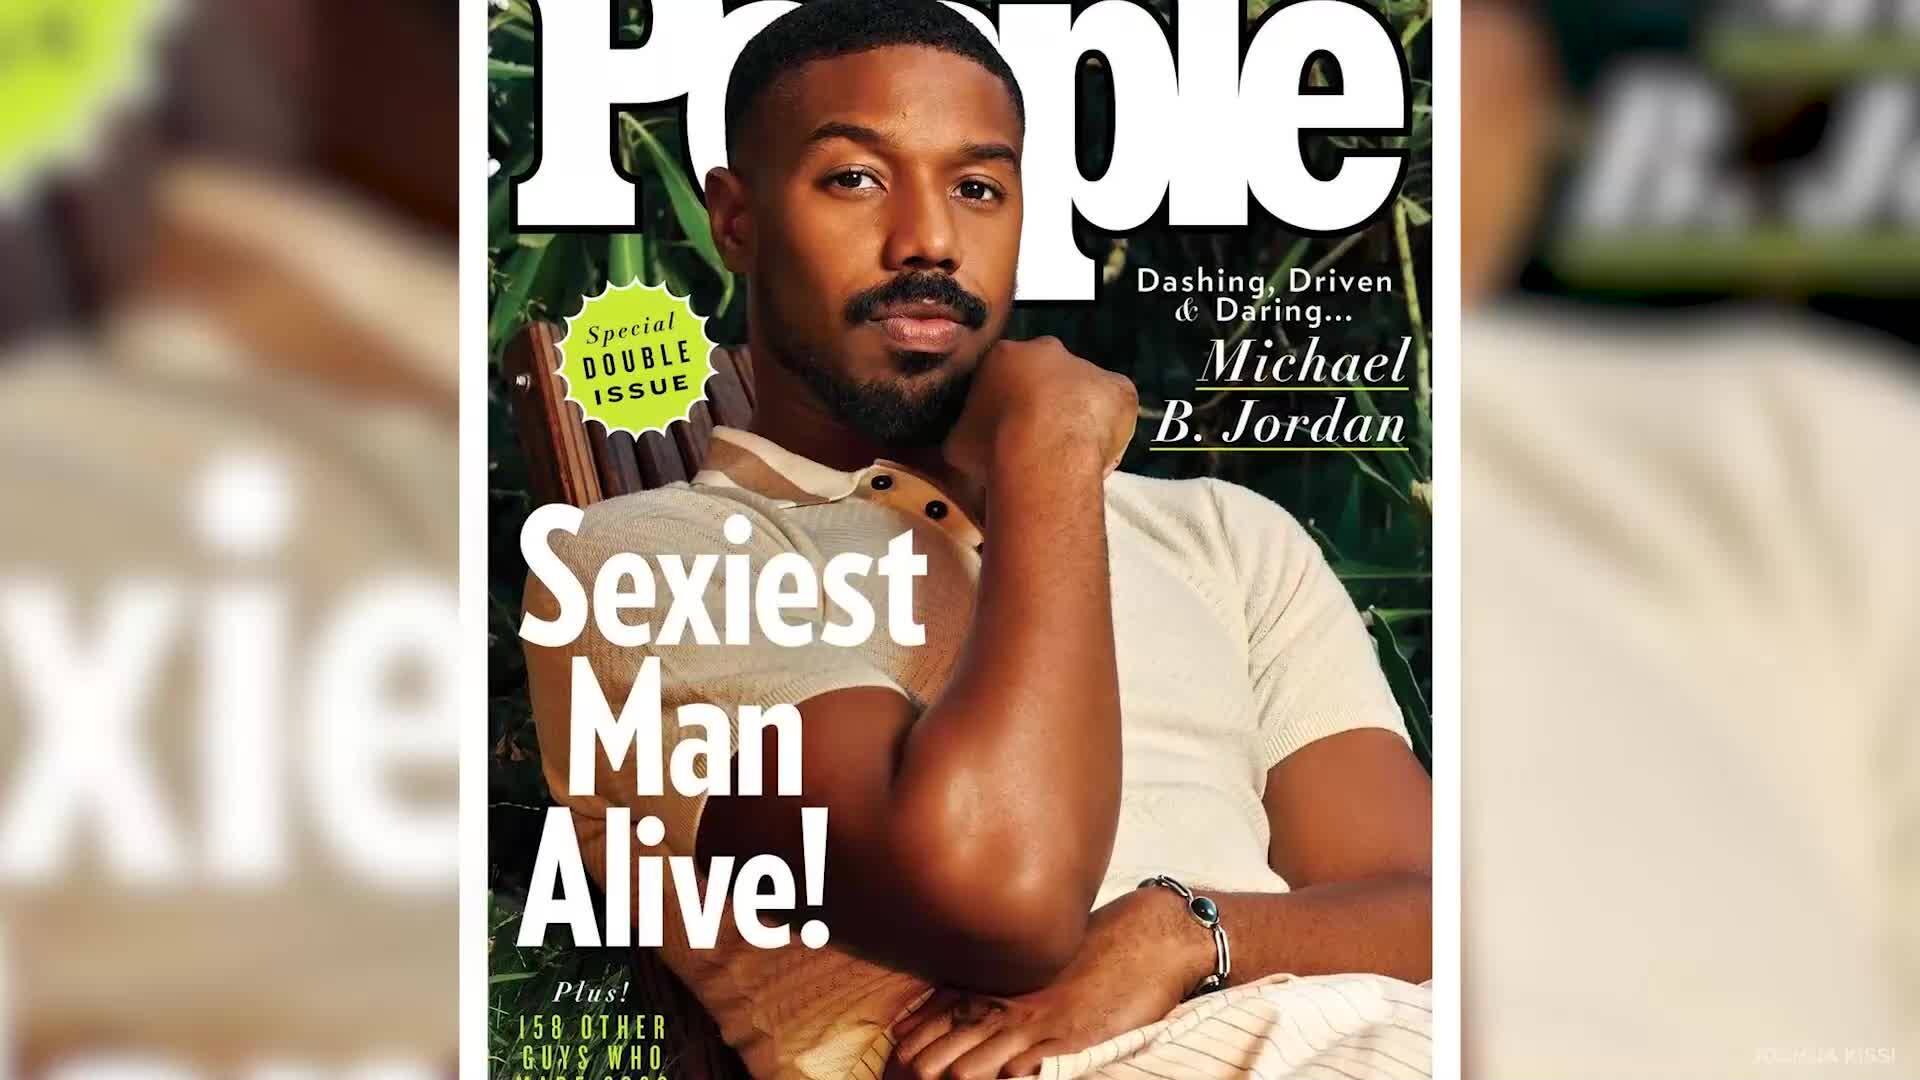 Michael B. Jordan reveals the woman most proud of his Sexiest Man Alive title